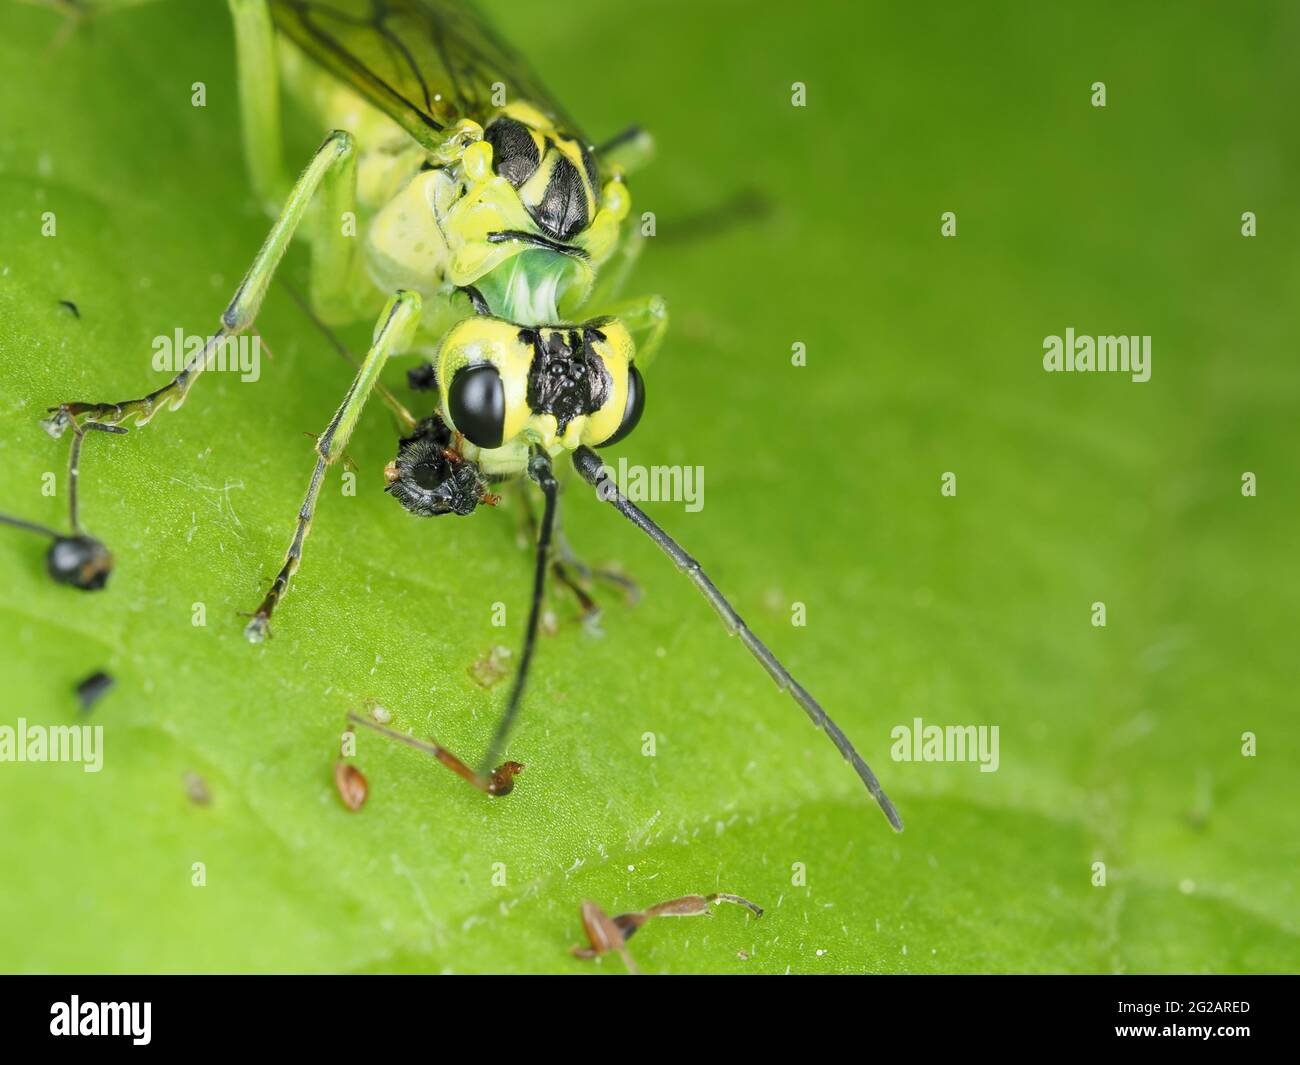 Green sawfly (most likely Tenthredo rhammisia) eating prey Stock Photo